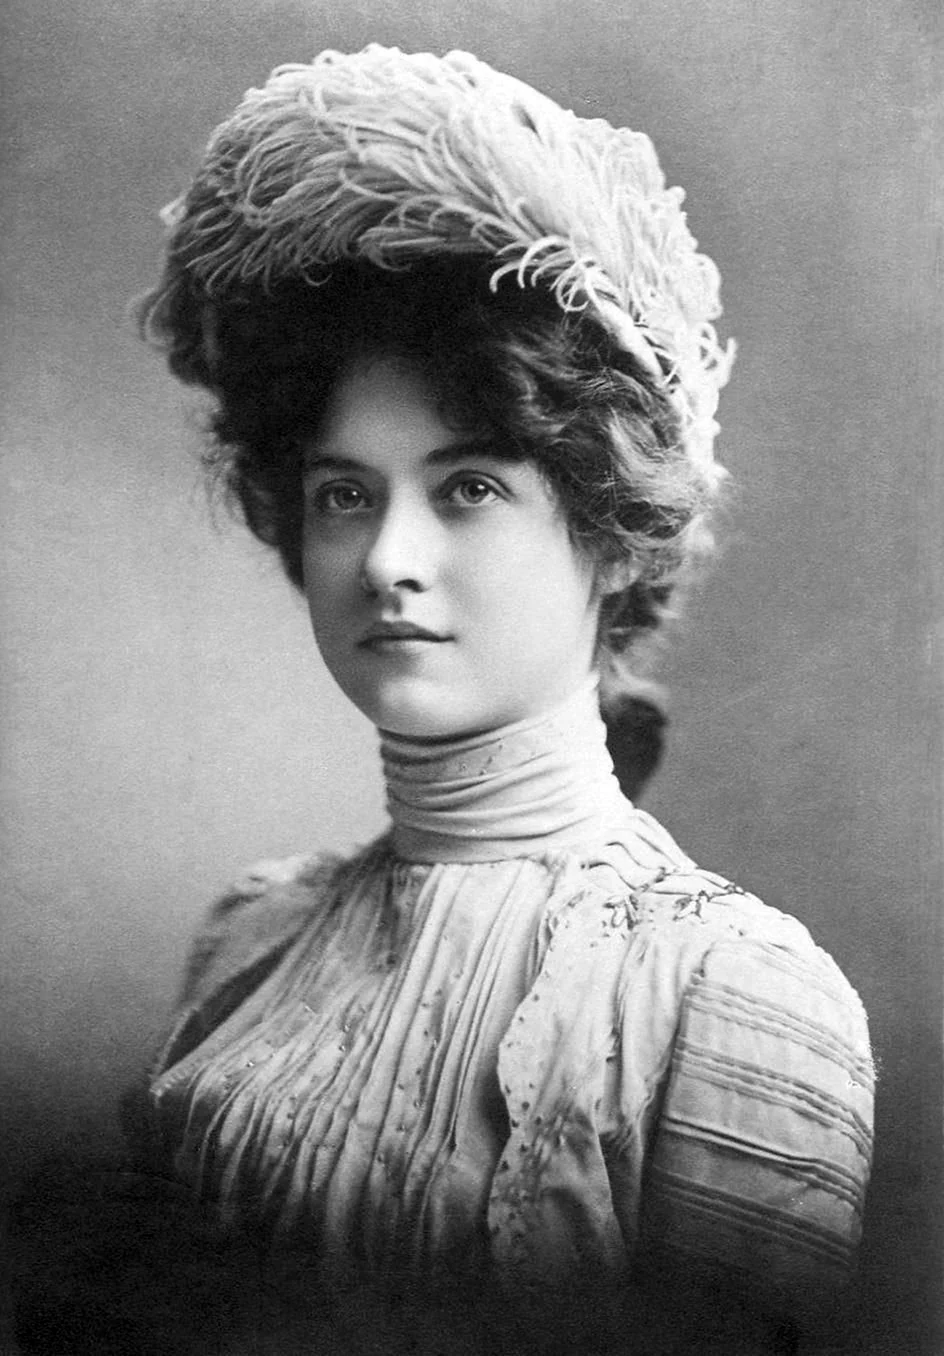 Maude Fealy красавицы 19 века